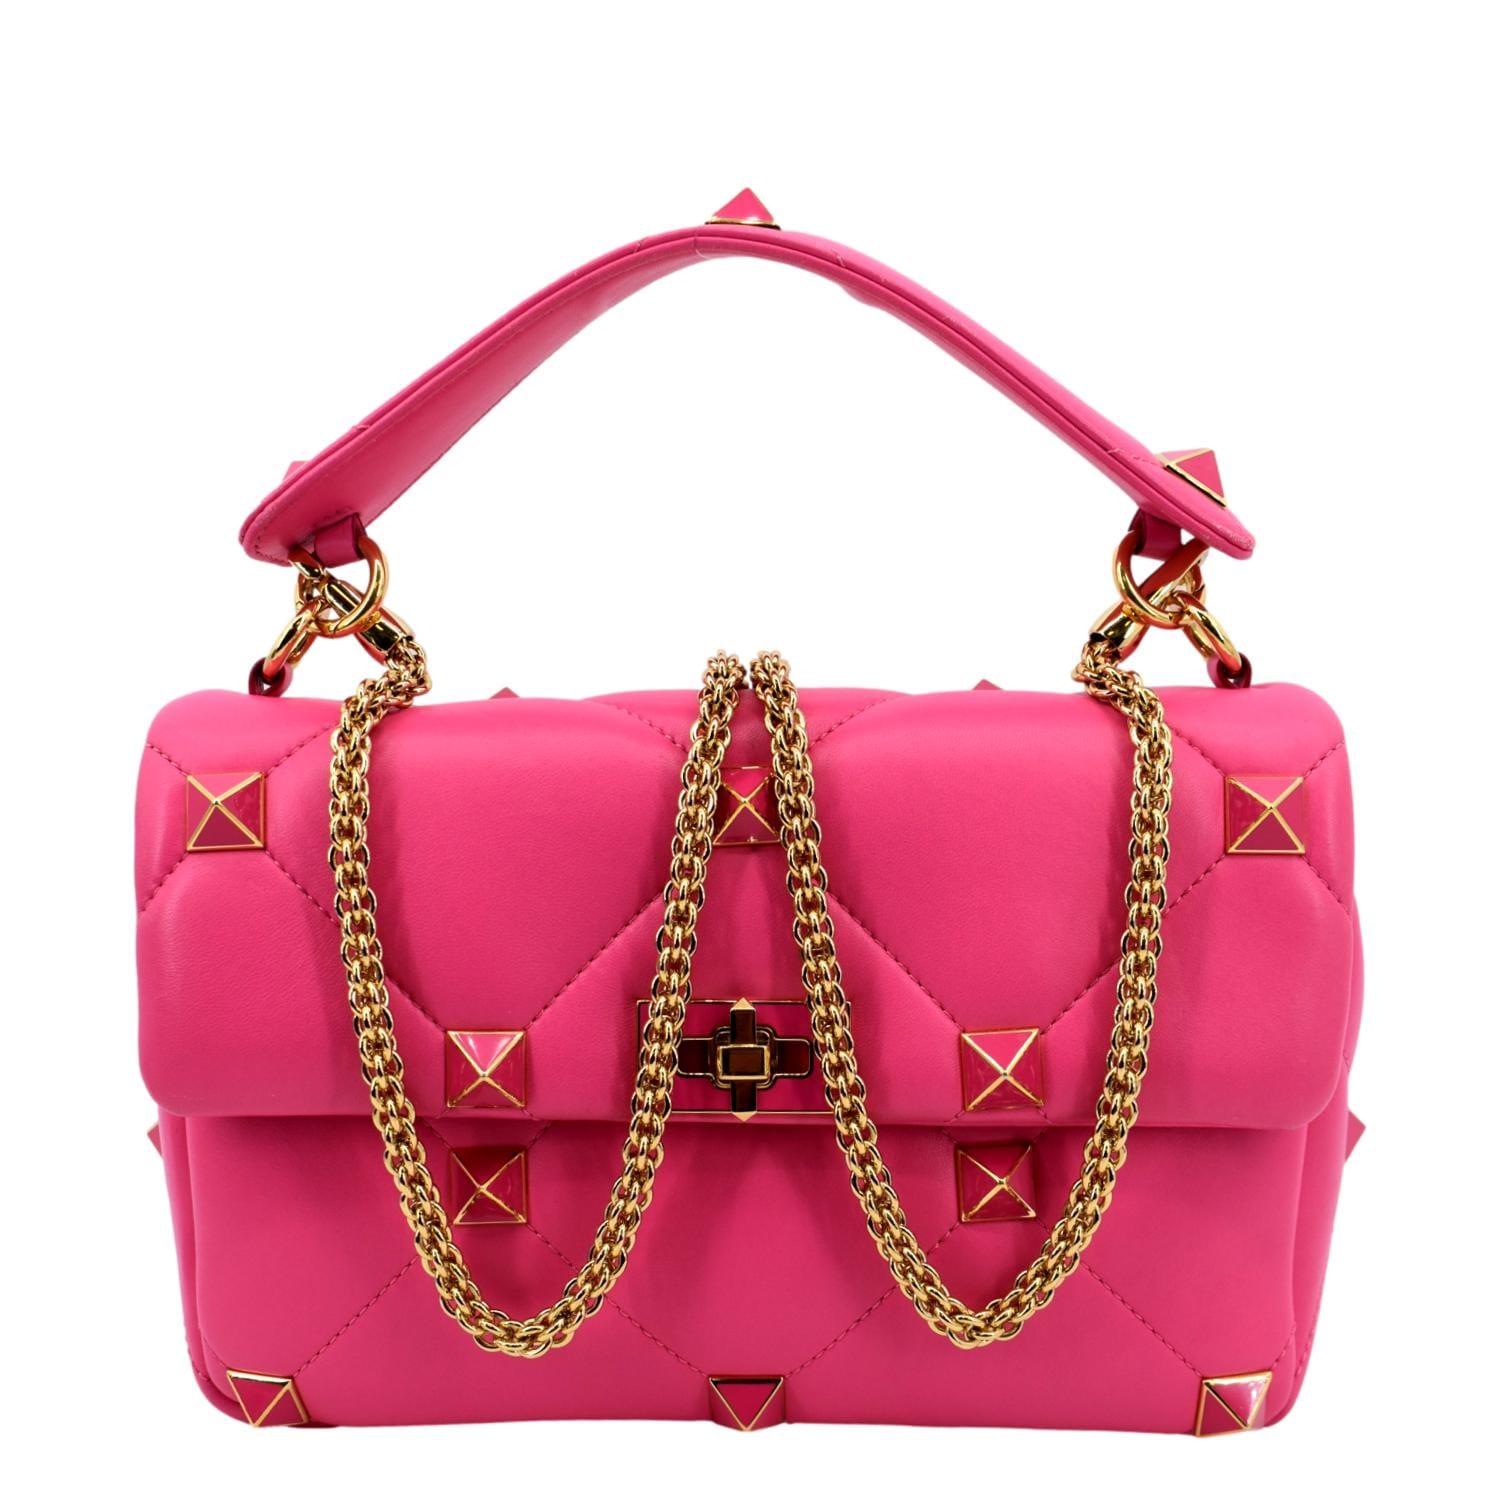 Valentino Pink Handbags on Sale